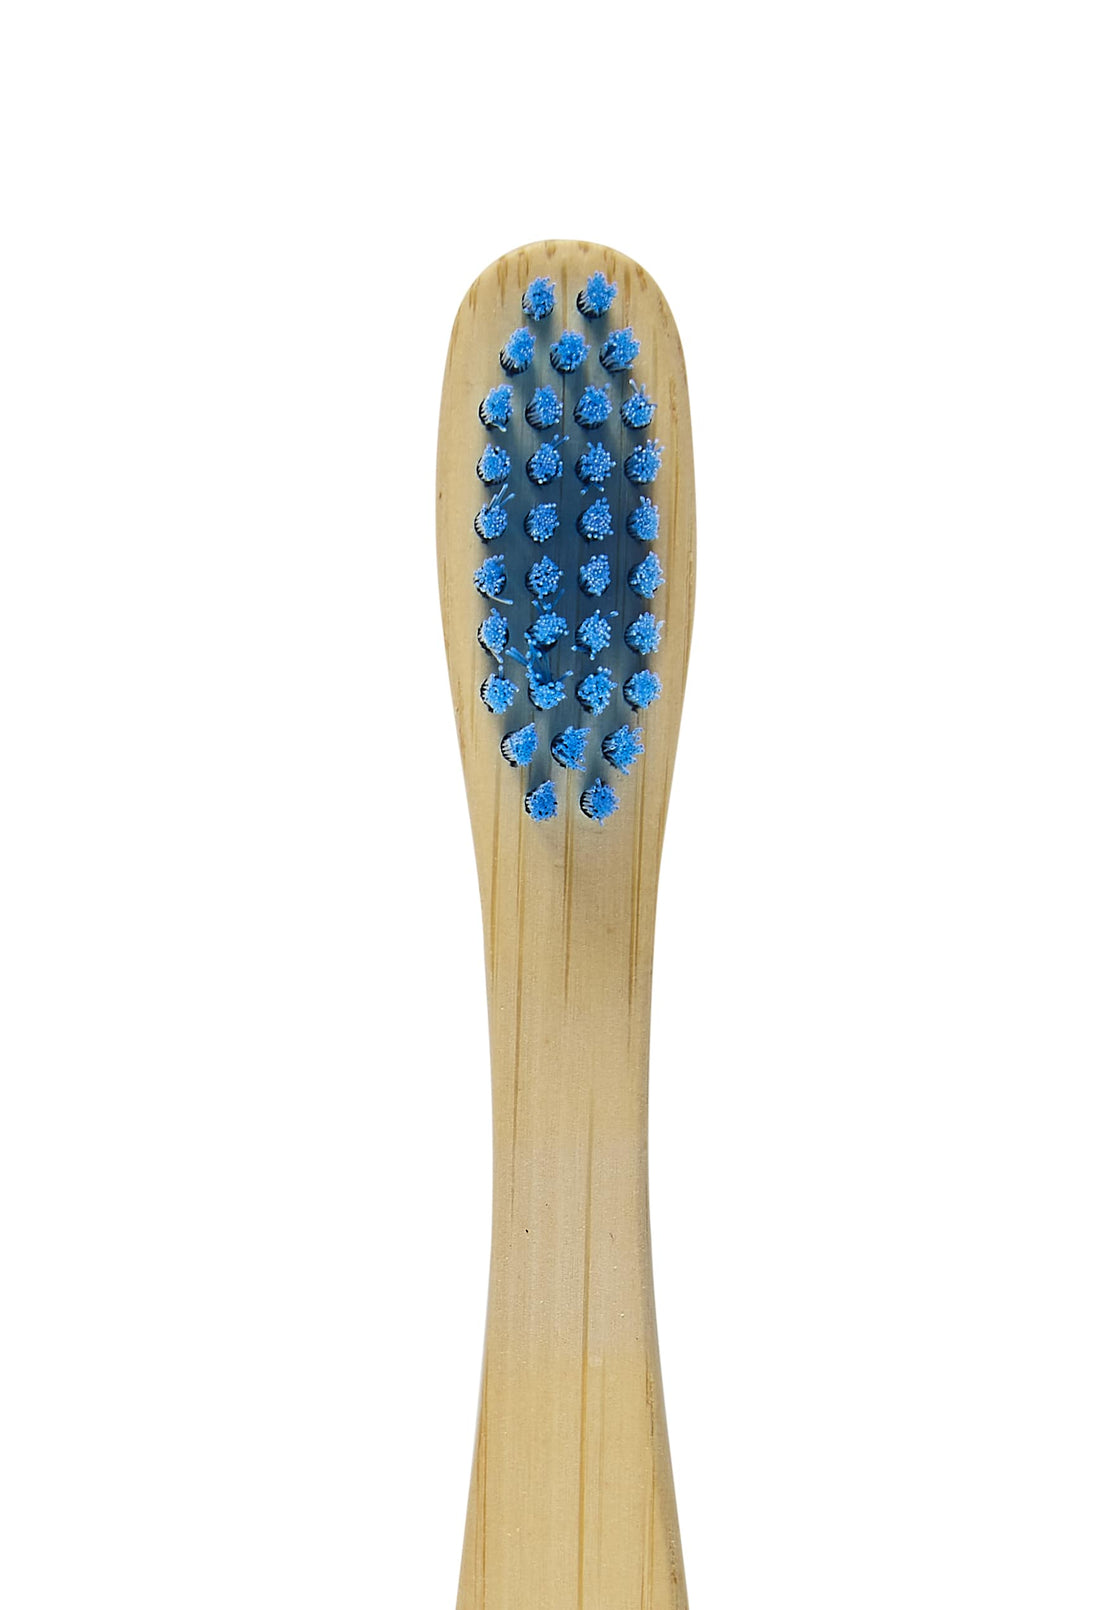 Toothbrush bristles in blue